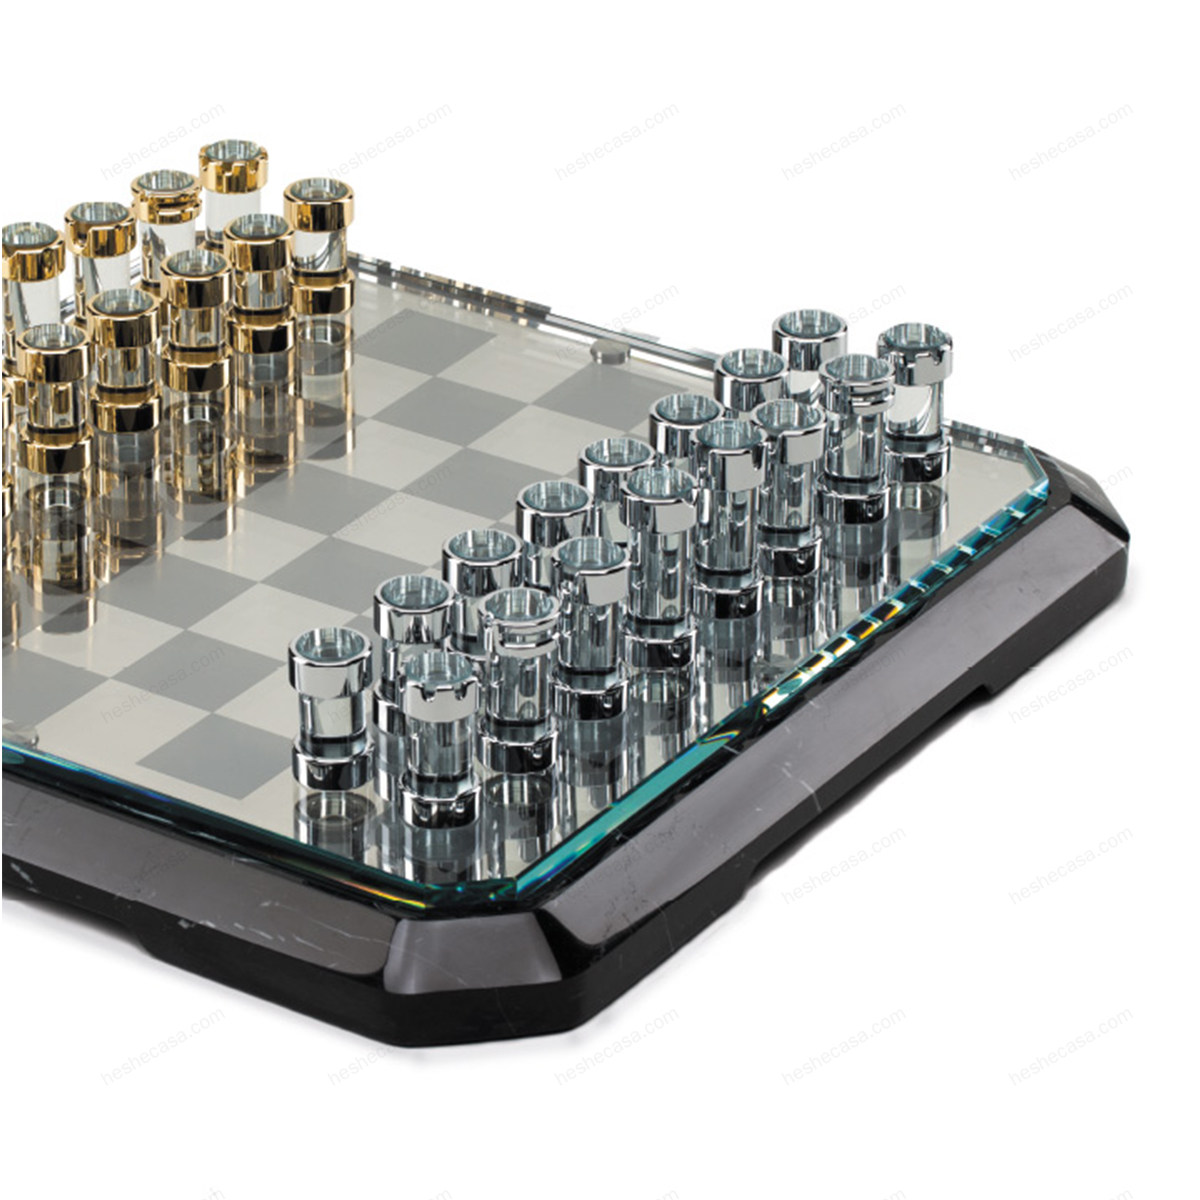 Stratego 国际象棋